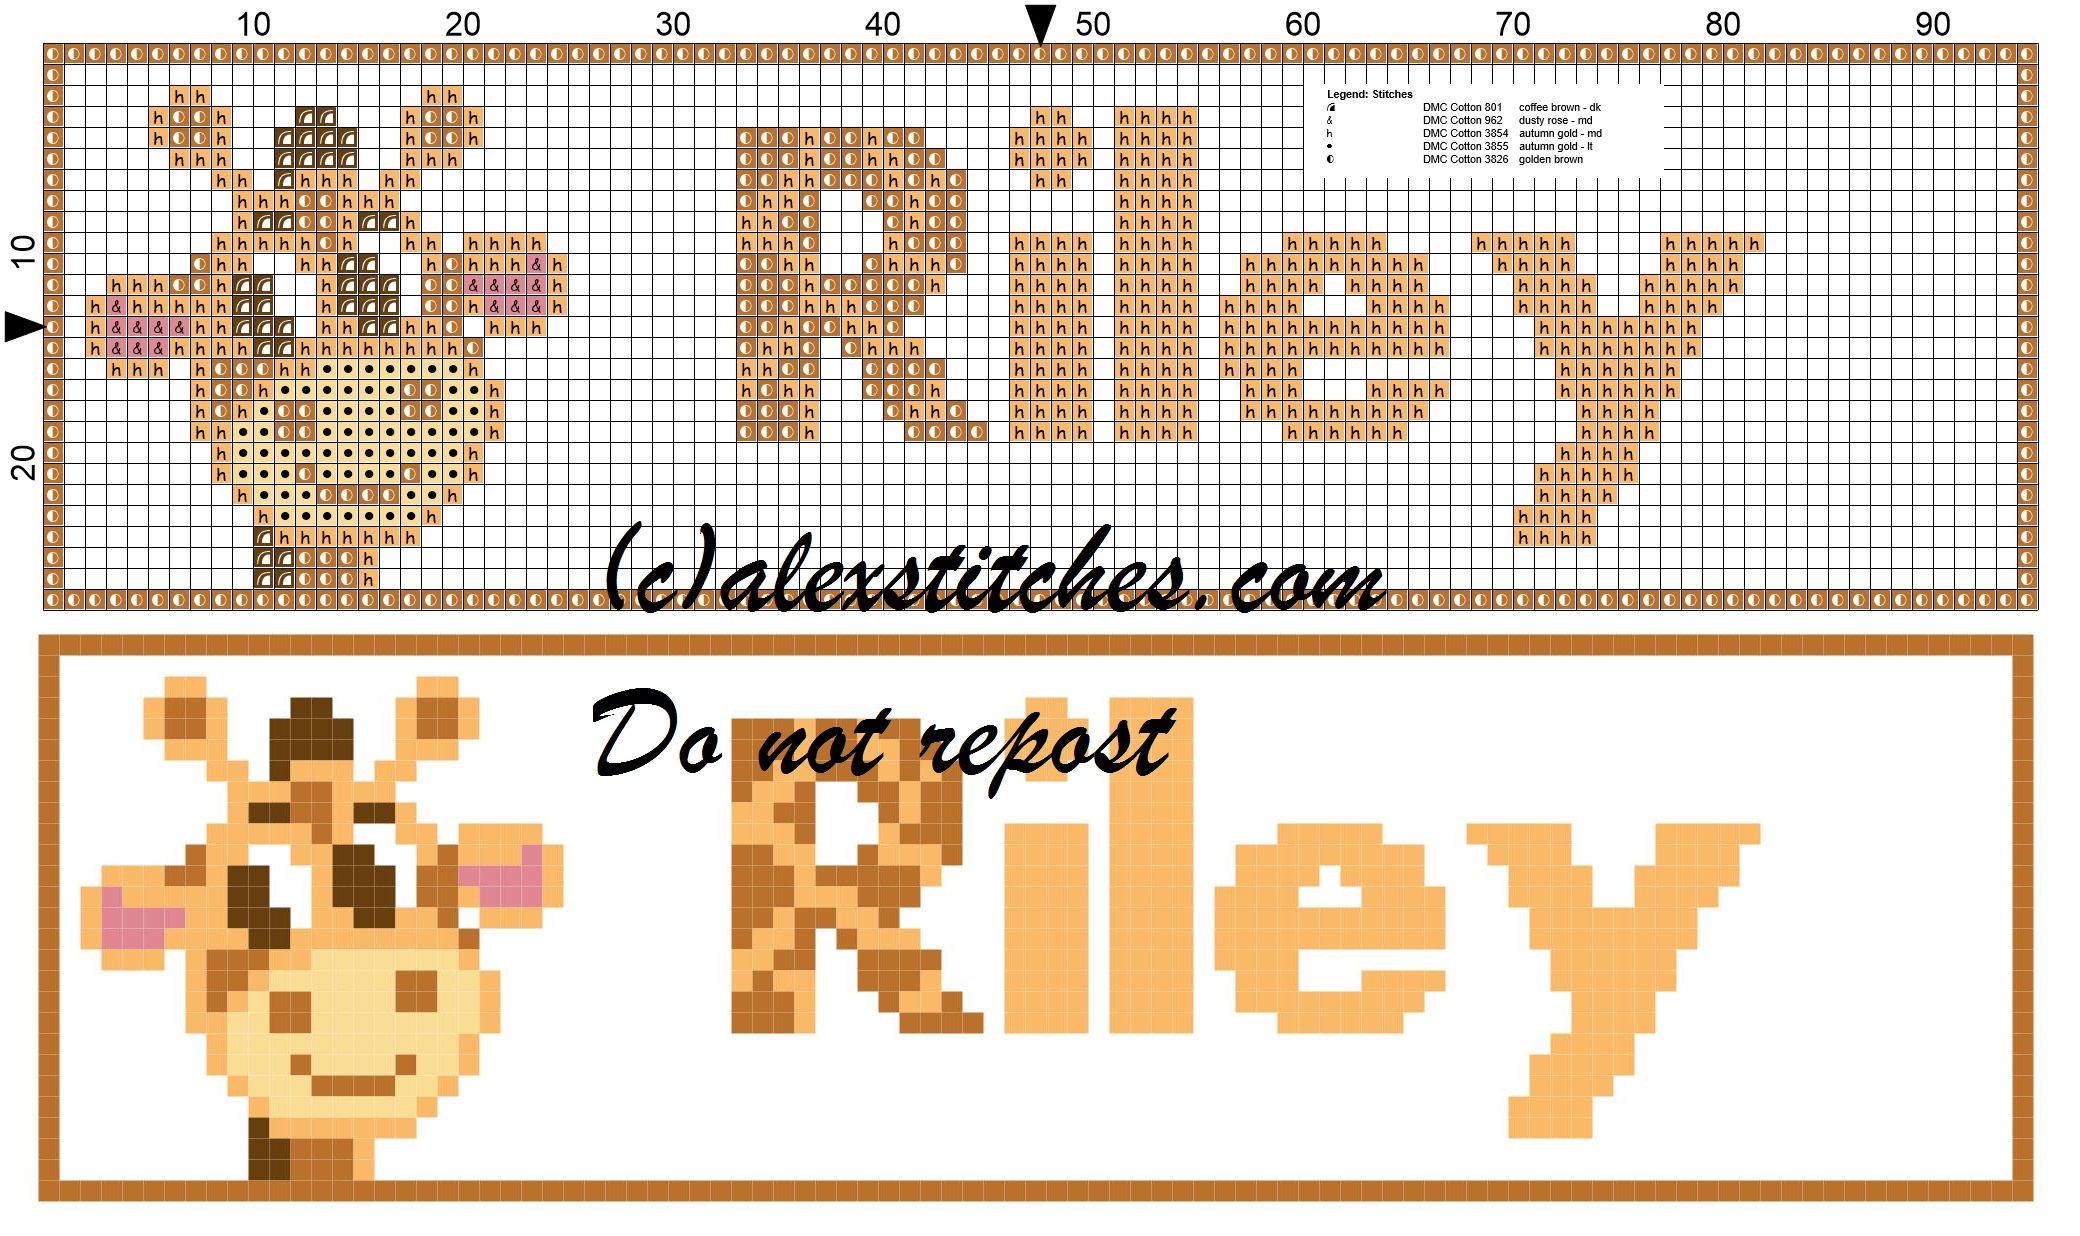 Riley name with giraffe cross stitch pattern